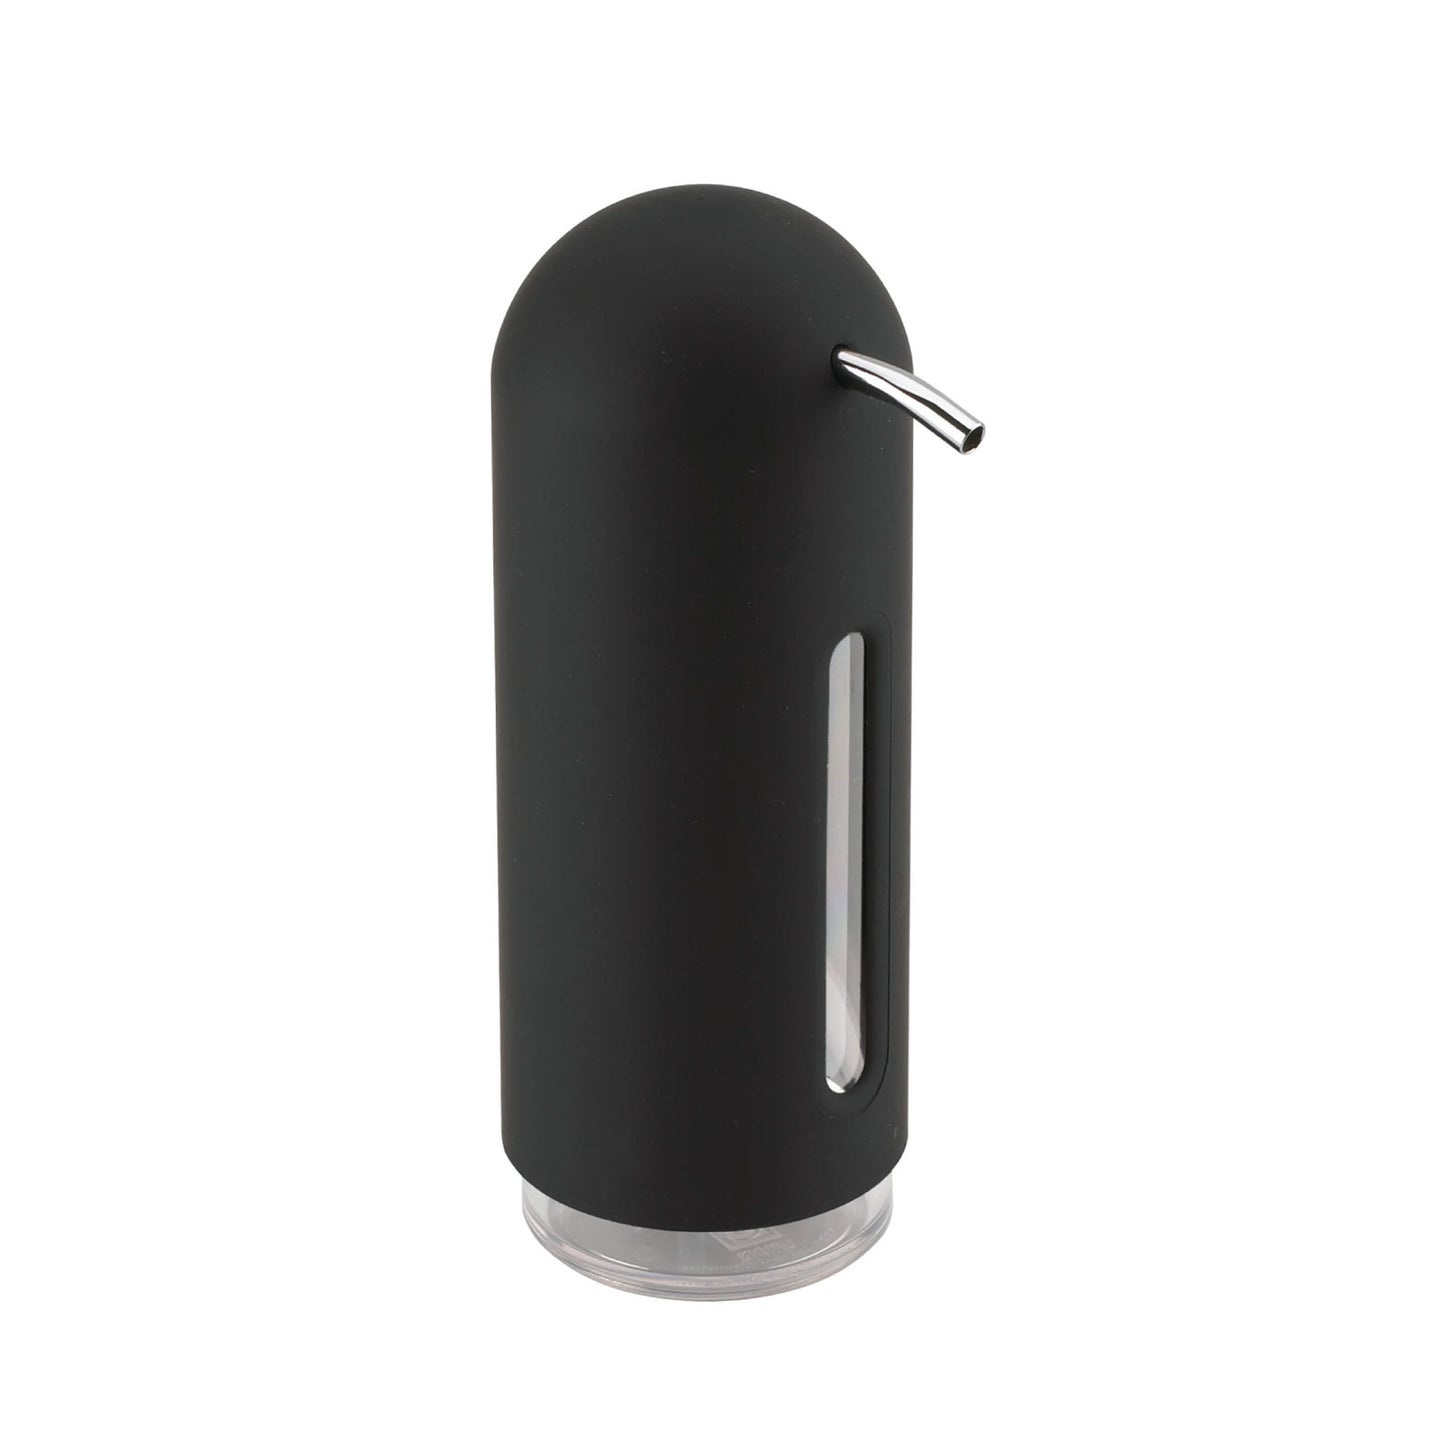 Penguin Soap Pump in Black